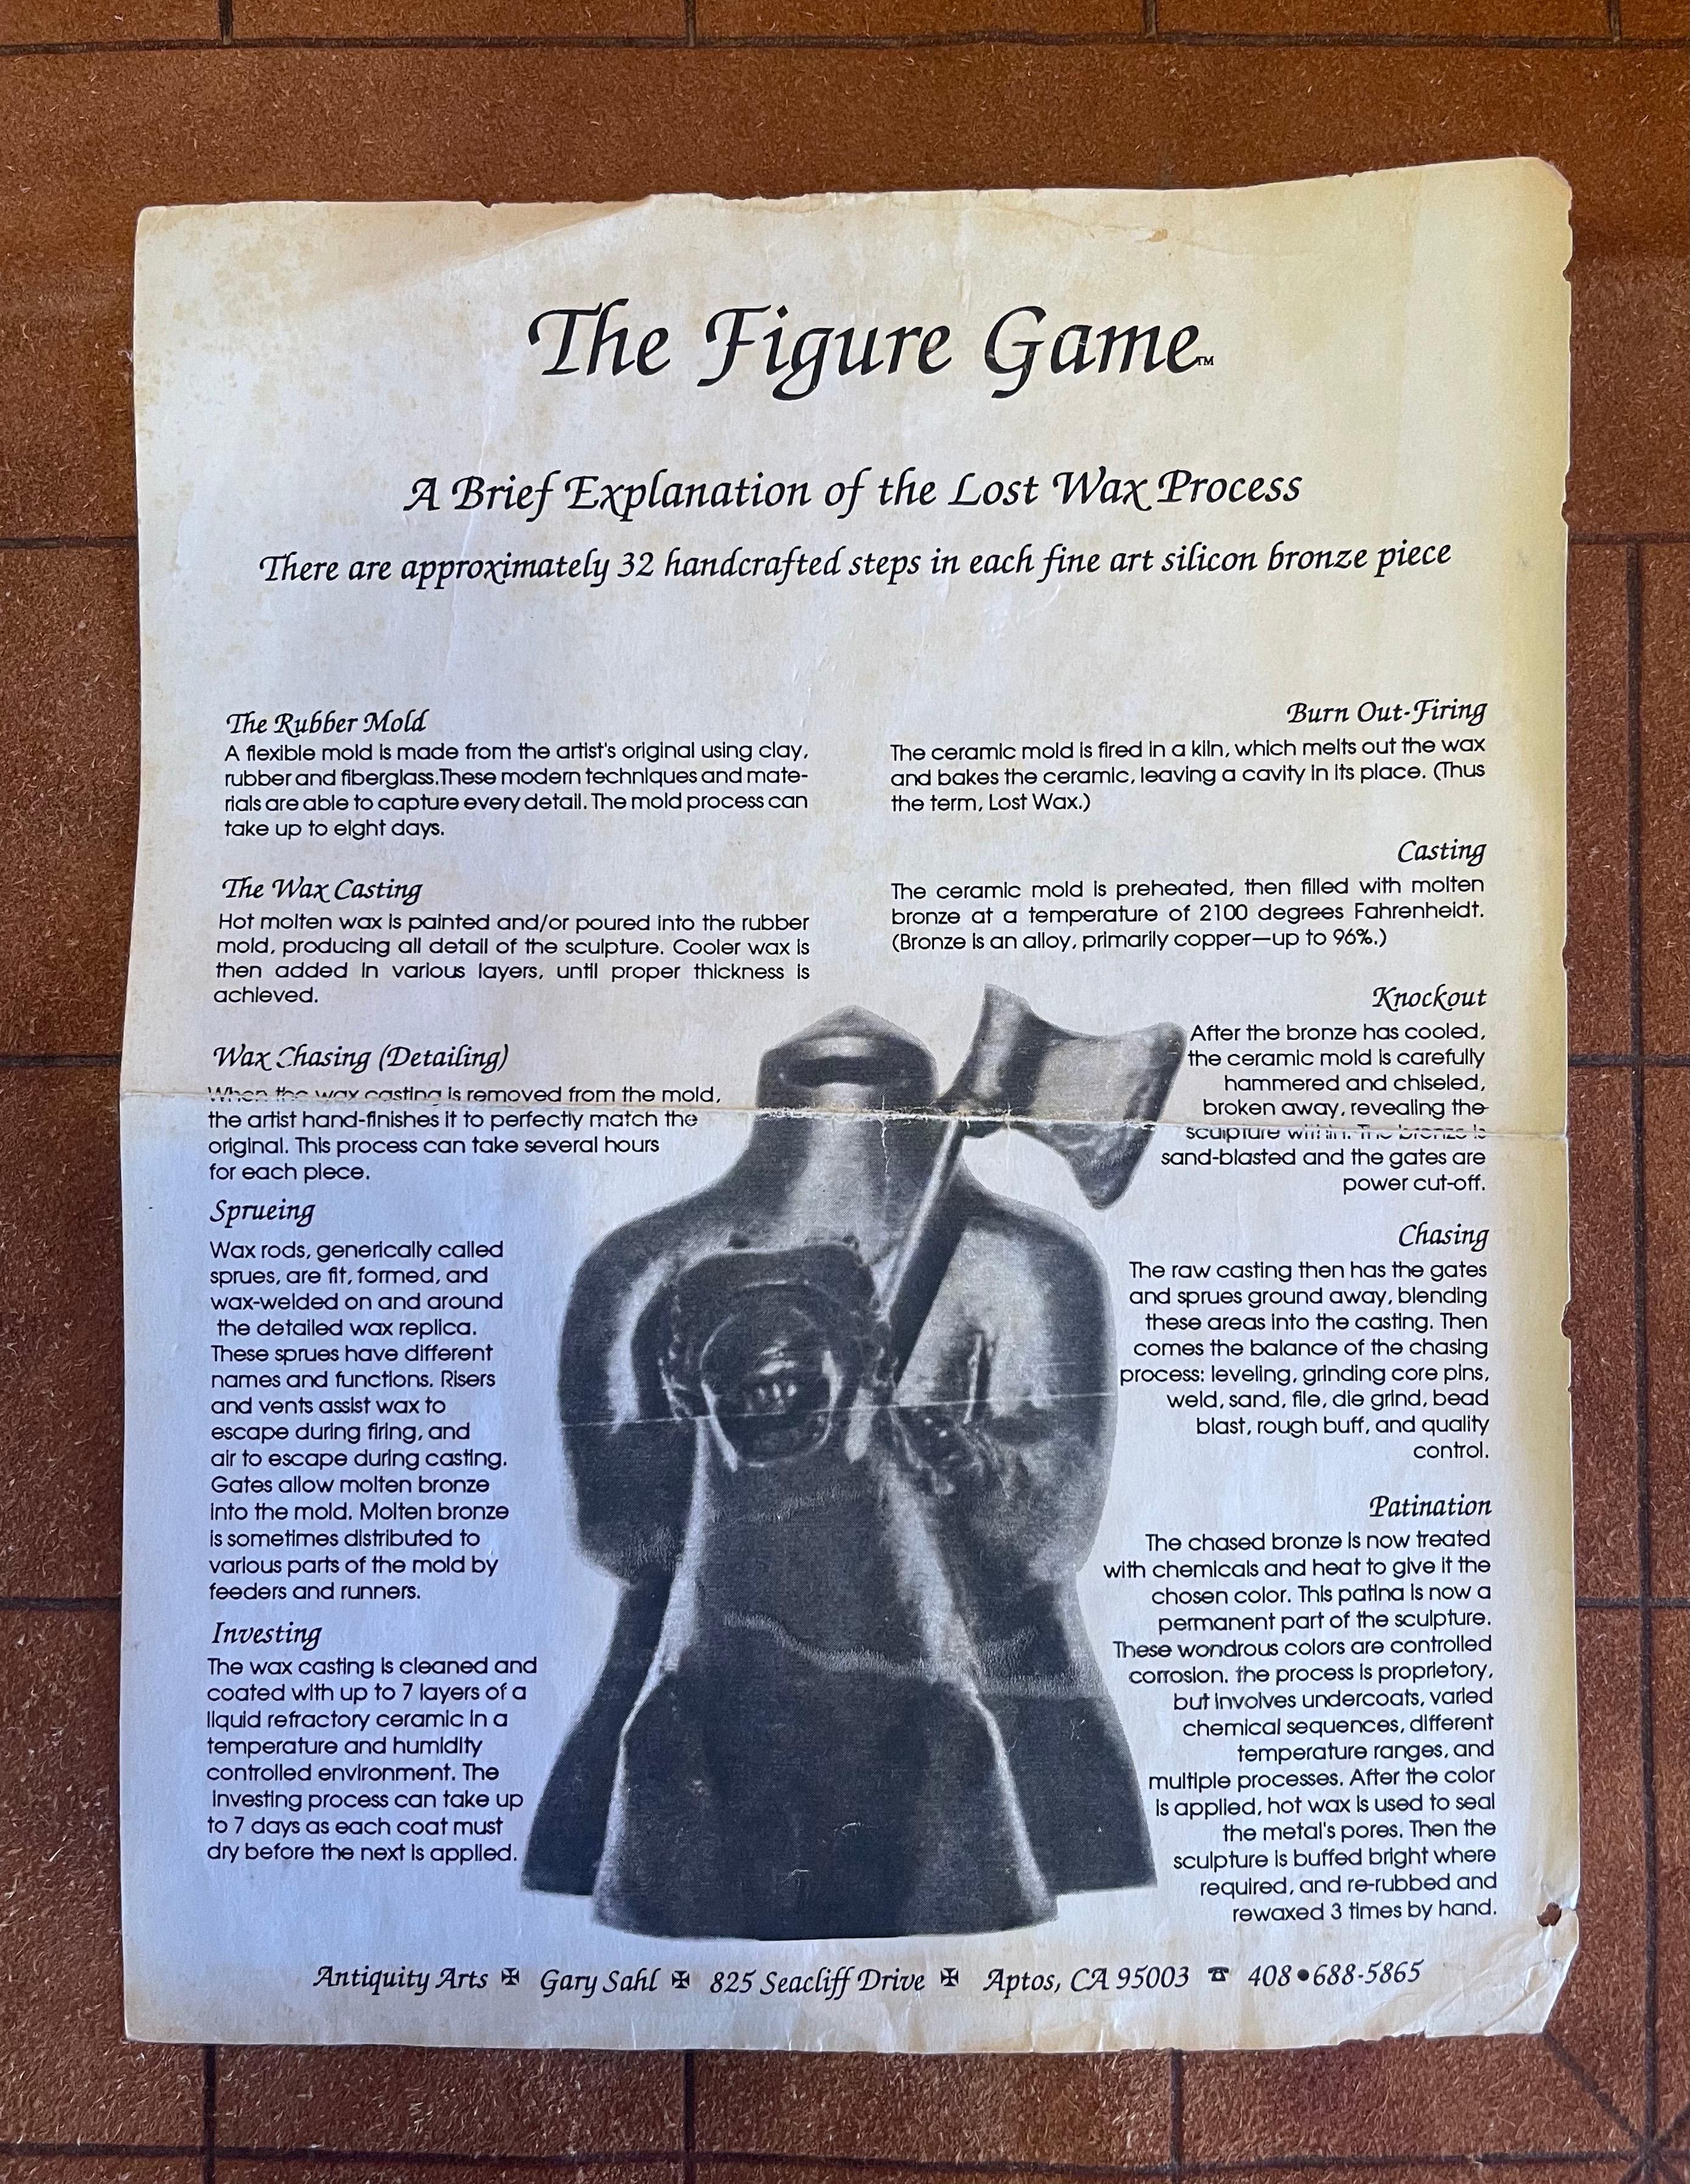 Le jeu de figurines « The Original Game of Chess » (Le jeu d'échecs original) en bronze de Gary Sahl Rare en vente 2